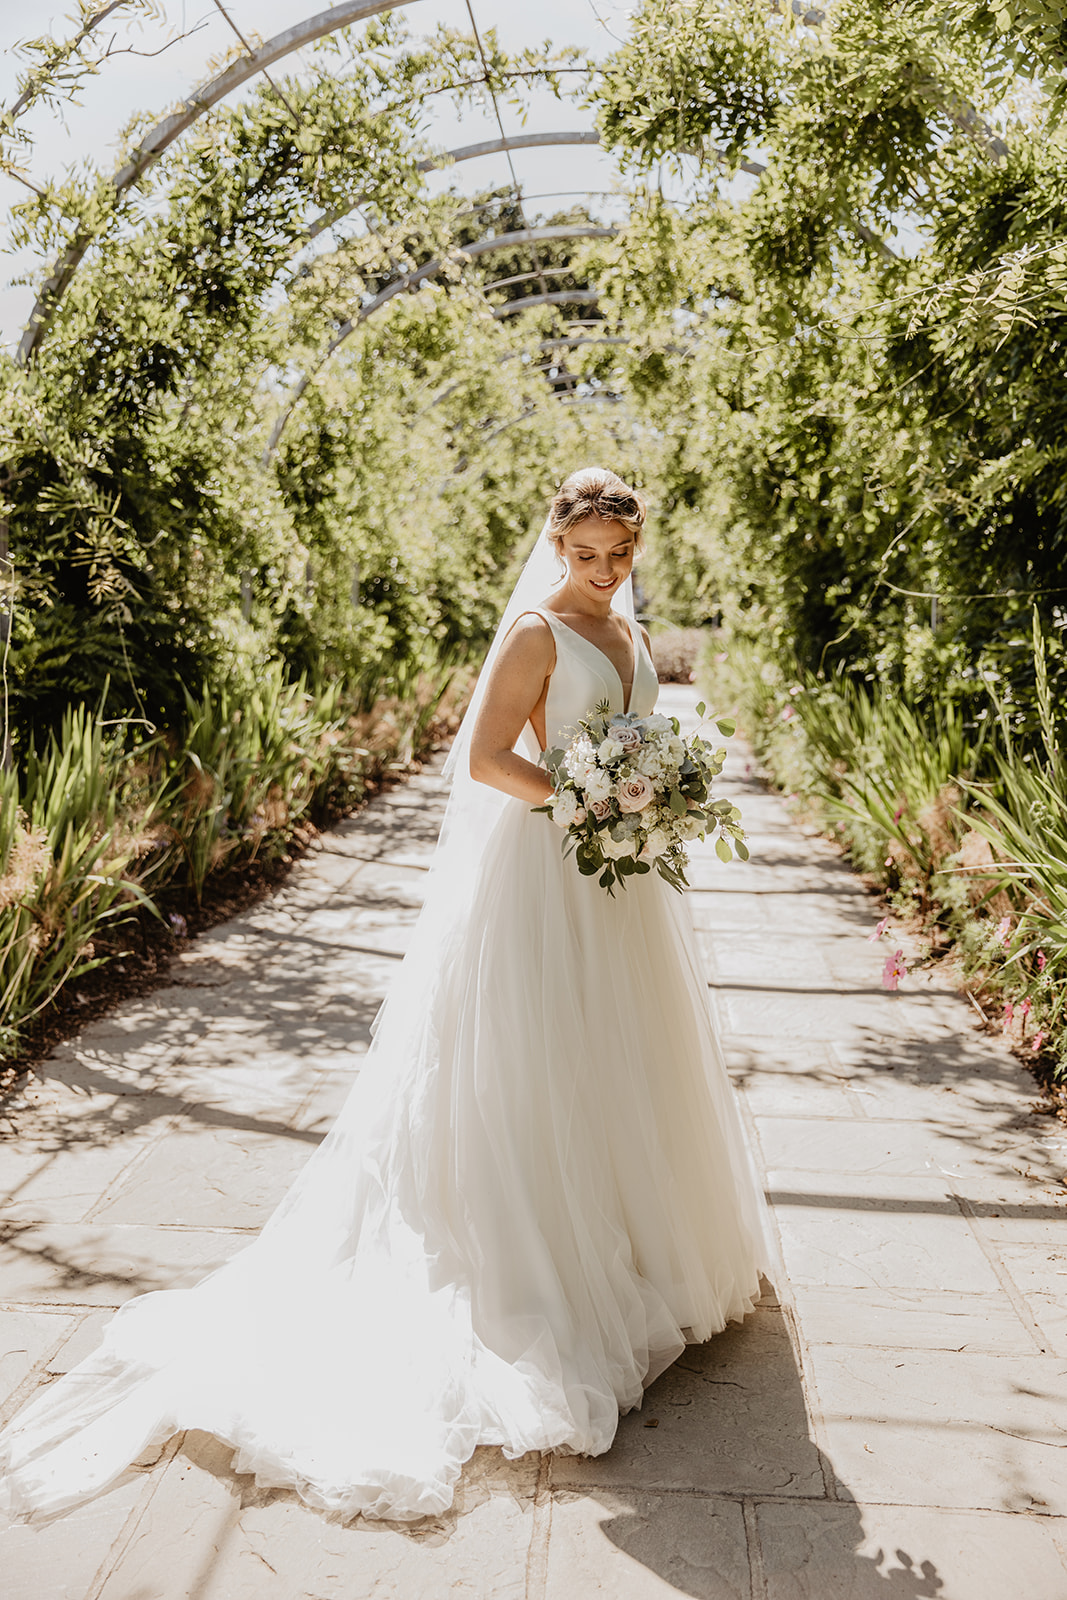 Bride walks through floral archway at a RHS Gardens Wisley Wedding. By Olive Joy Photography